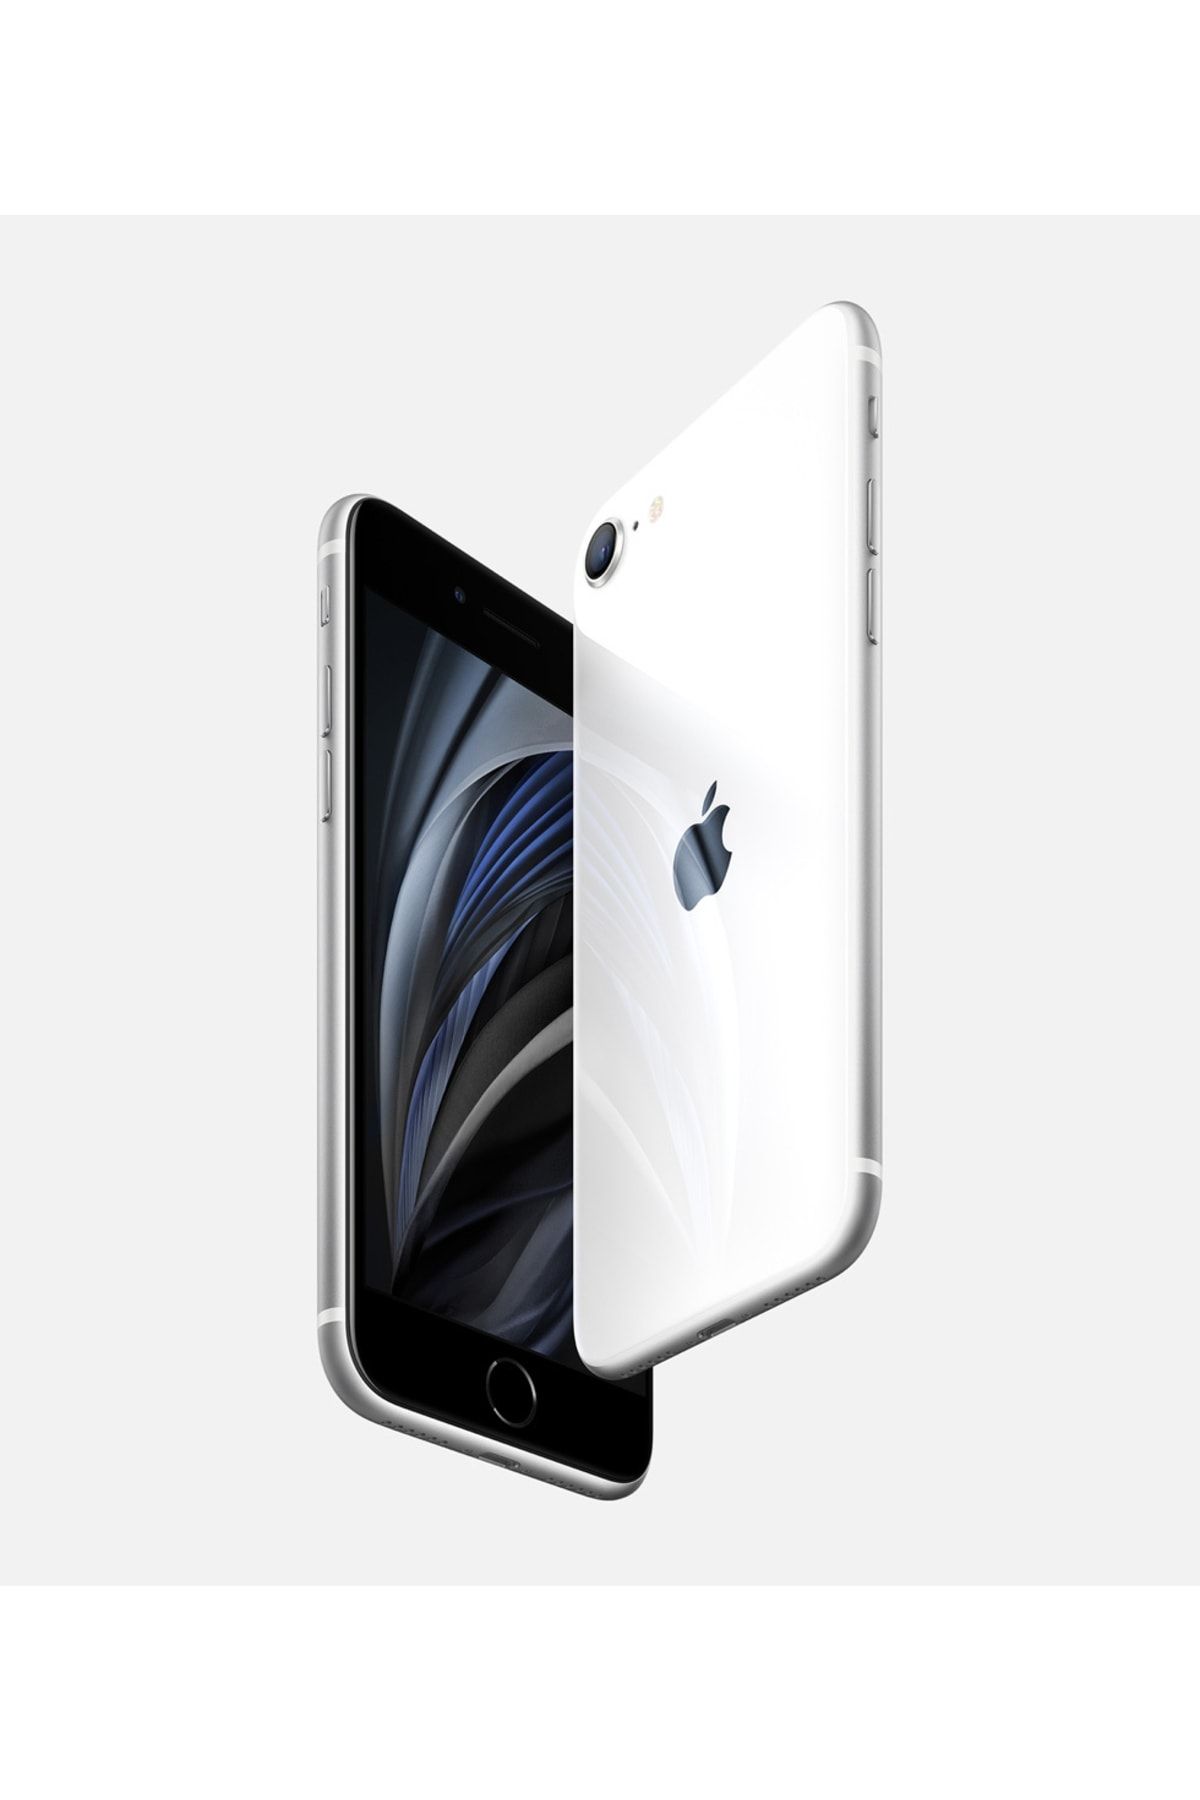 Apple Yenilenmiş iPhone Se 2020 64 GB White (12 Ay Garantili) B Grade